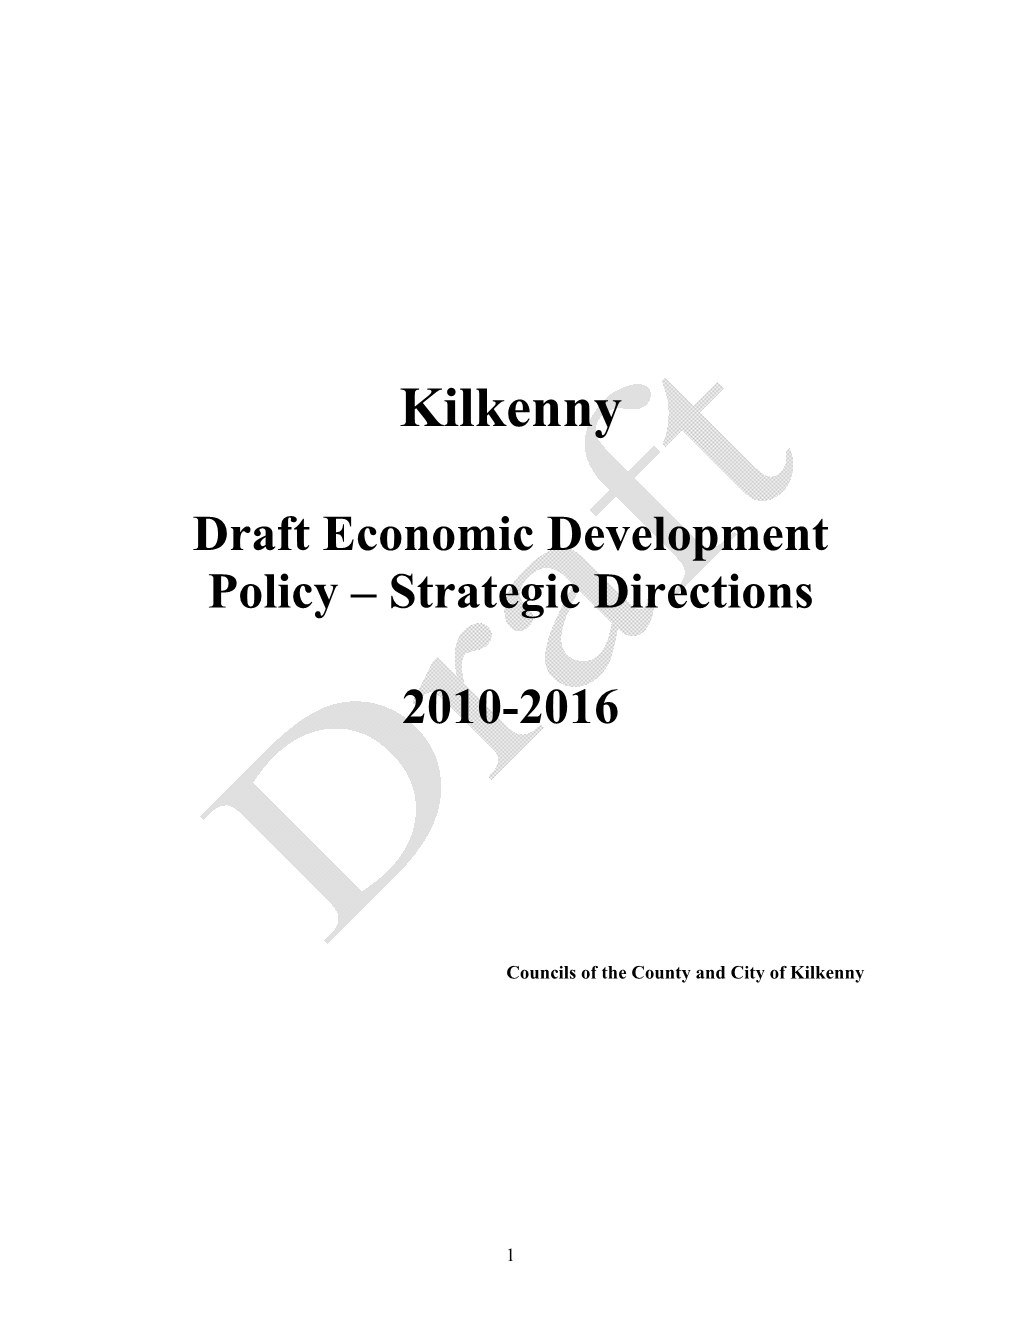 Kilkenny Draft Economic Development Policy